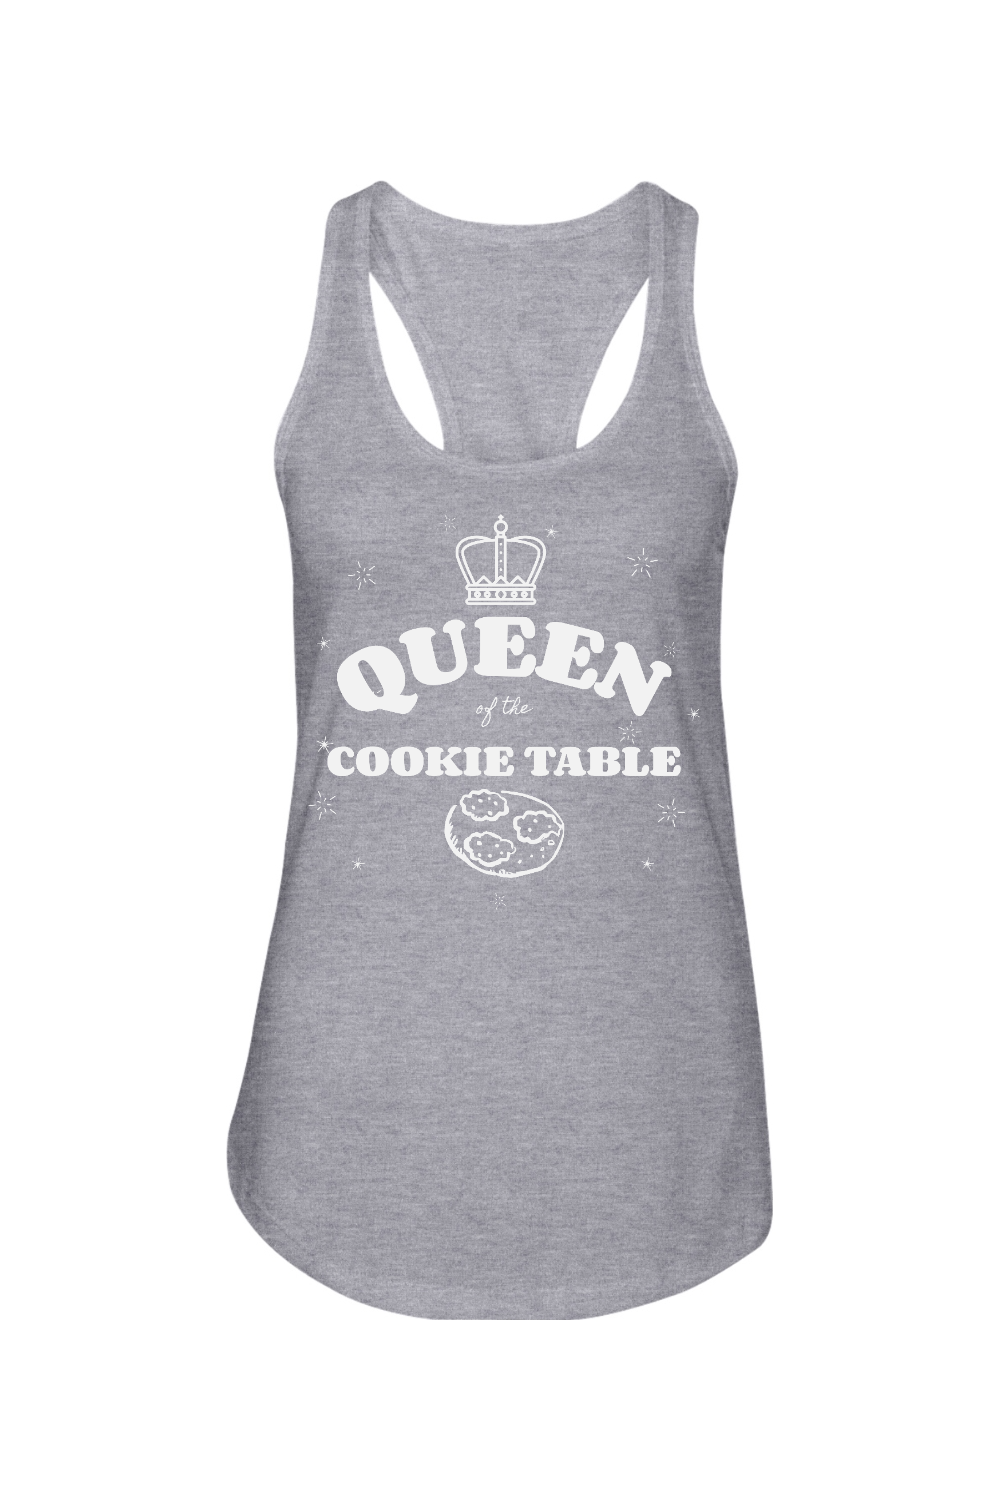 Queen of the Cookie Table - Ladies Racerback Tank - Yinzylvania